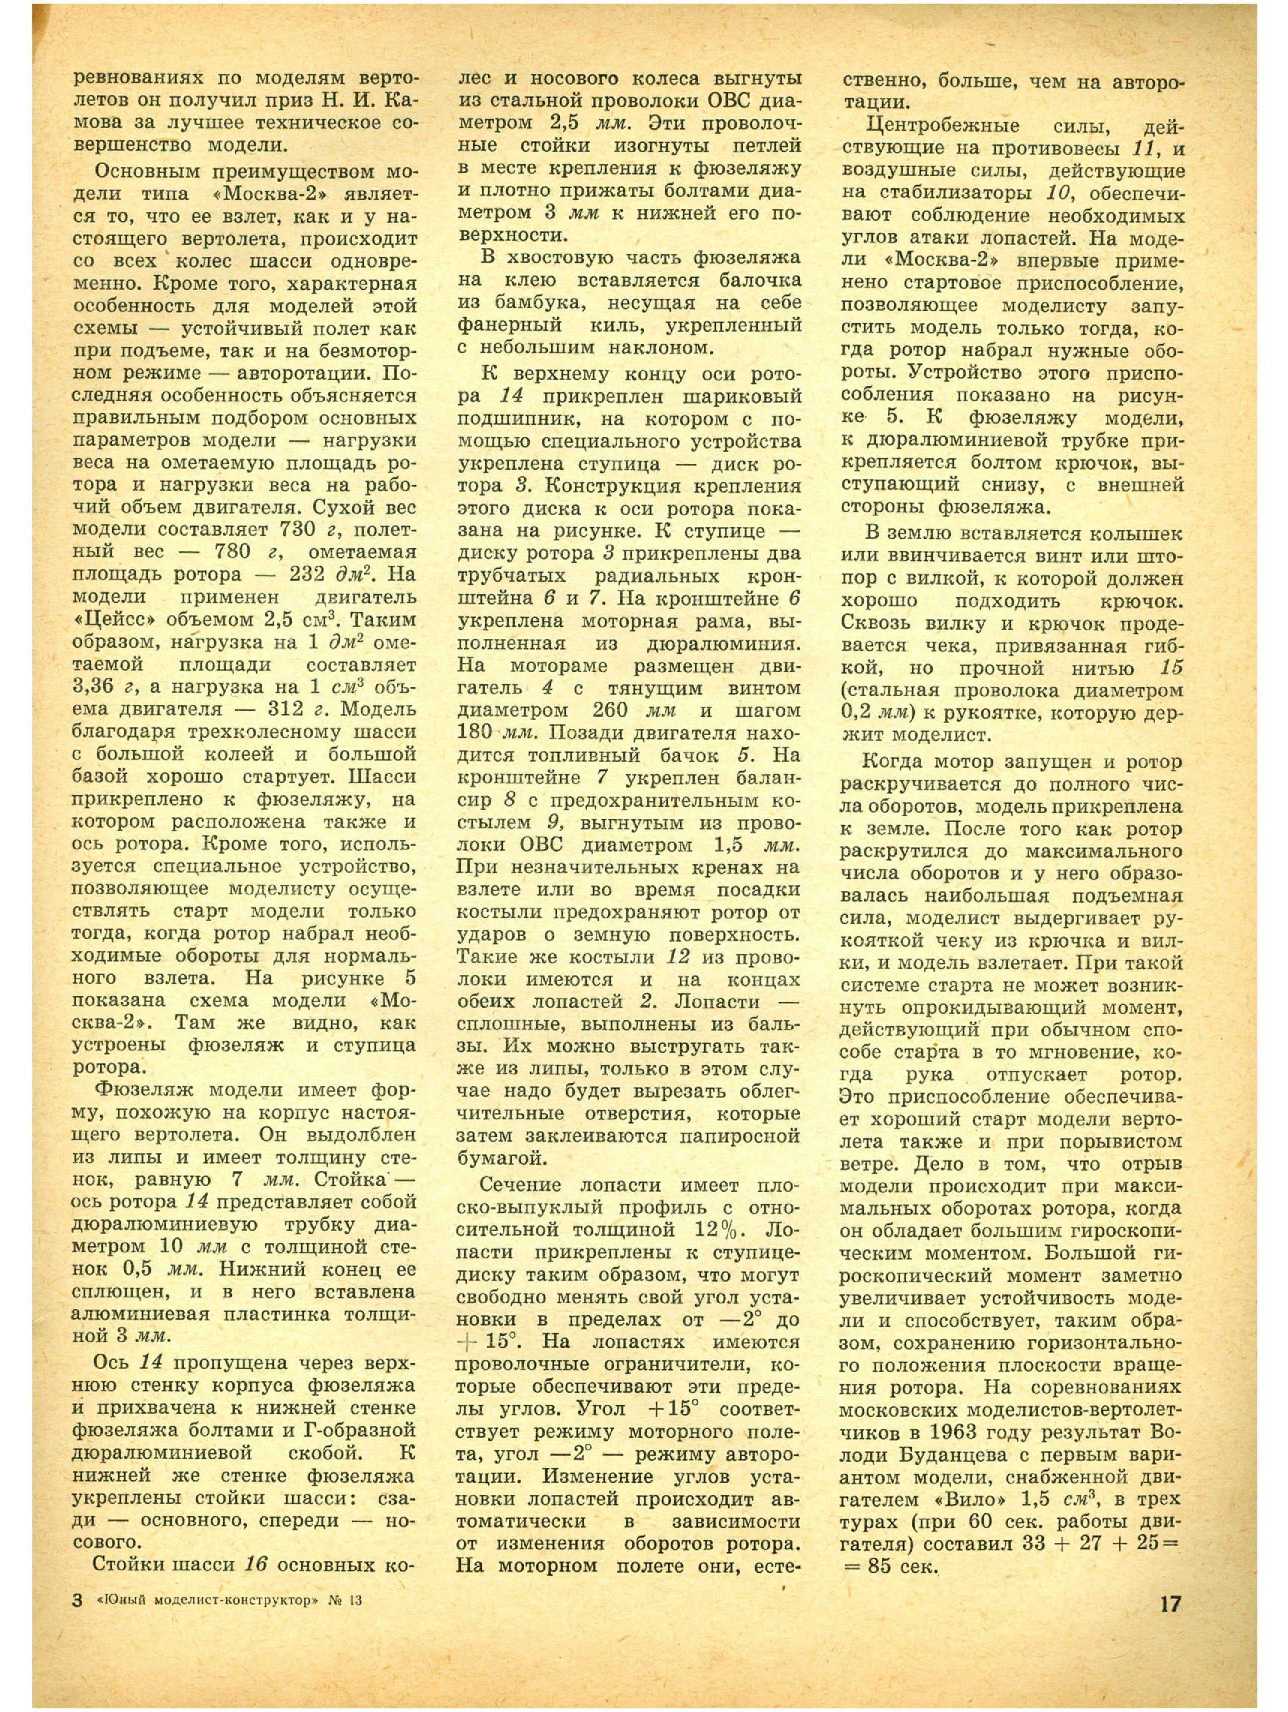 ЮМК 13, 1965, 17 c.